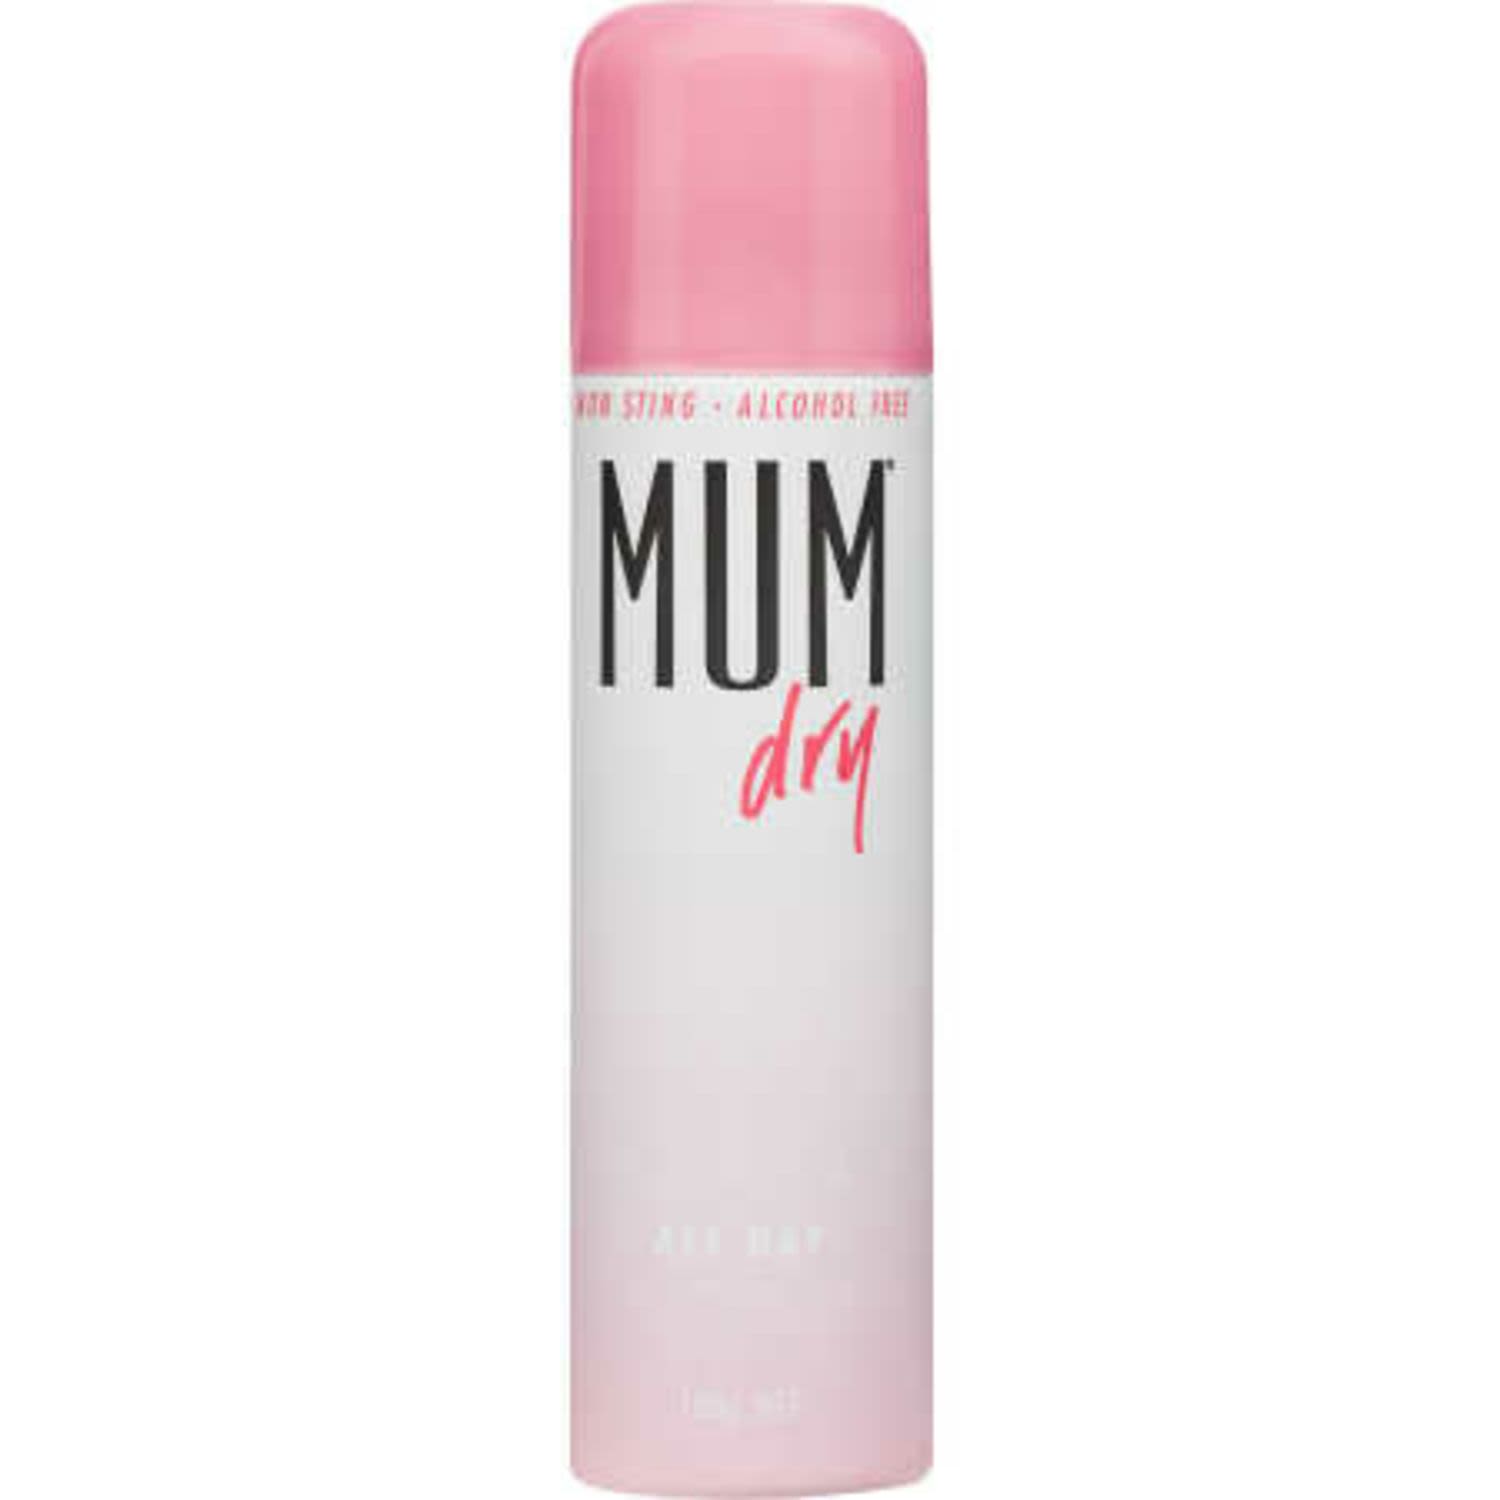 Mum Dry All Day Antiperspirant Deodorant, 100 Gram